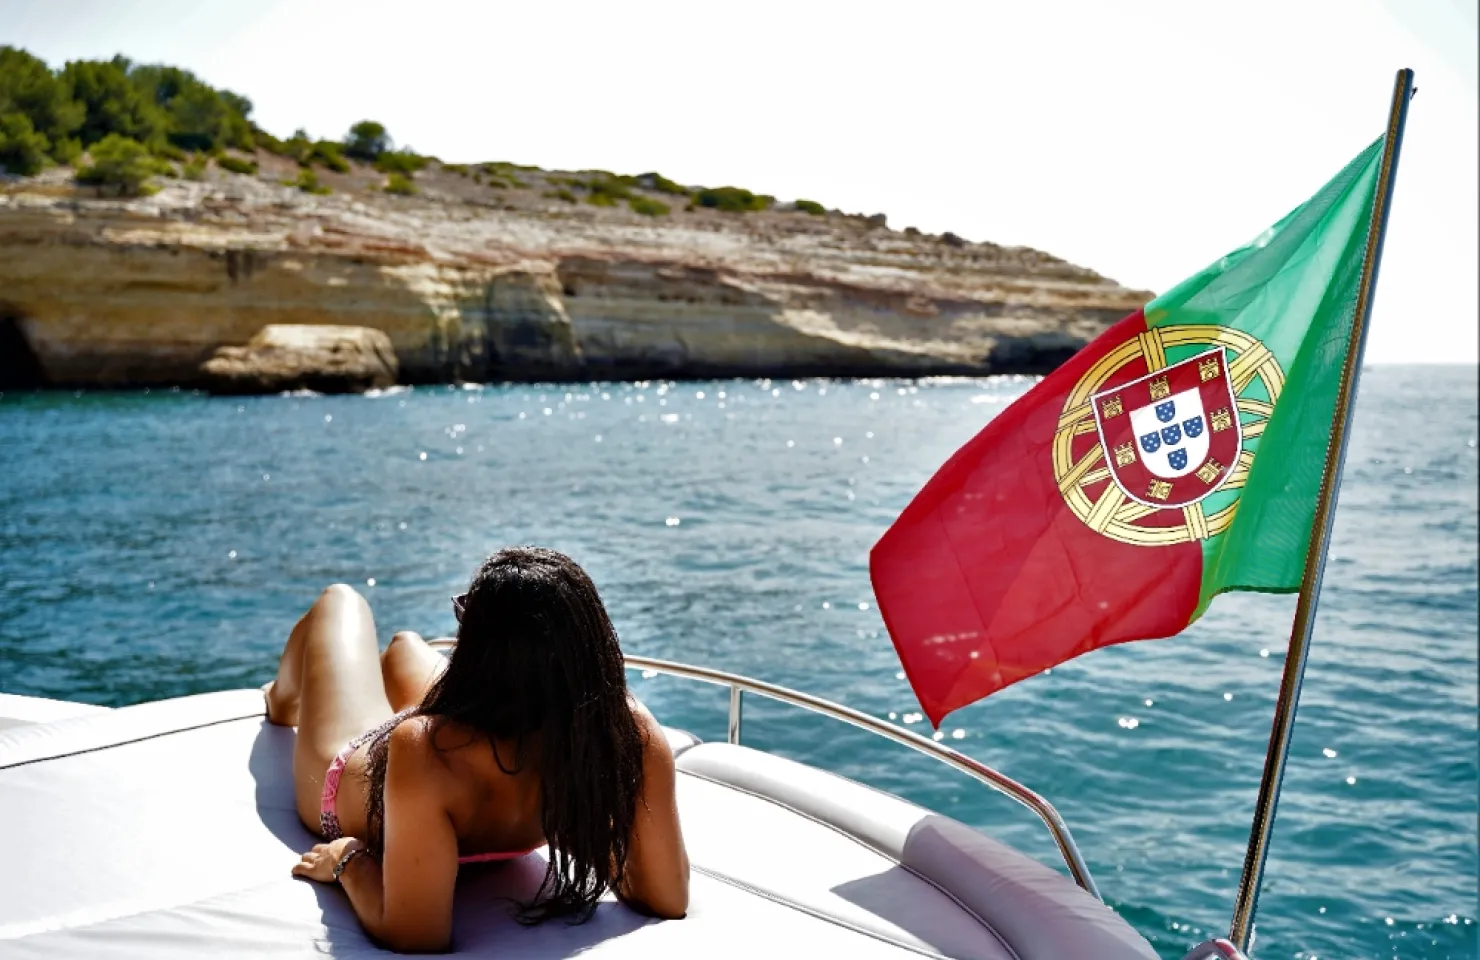 Full Day Luxury Yacht Charter - Portugal Luxury Cruise